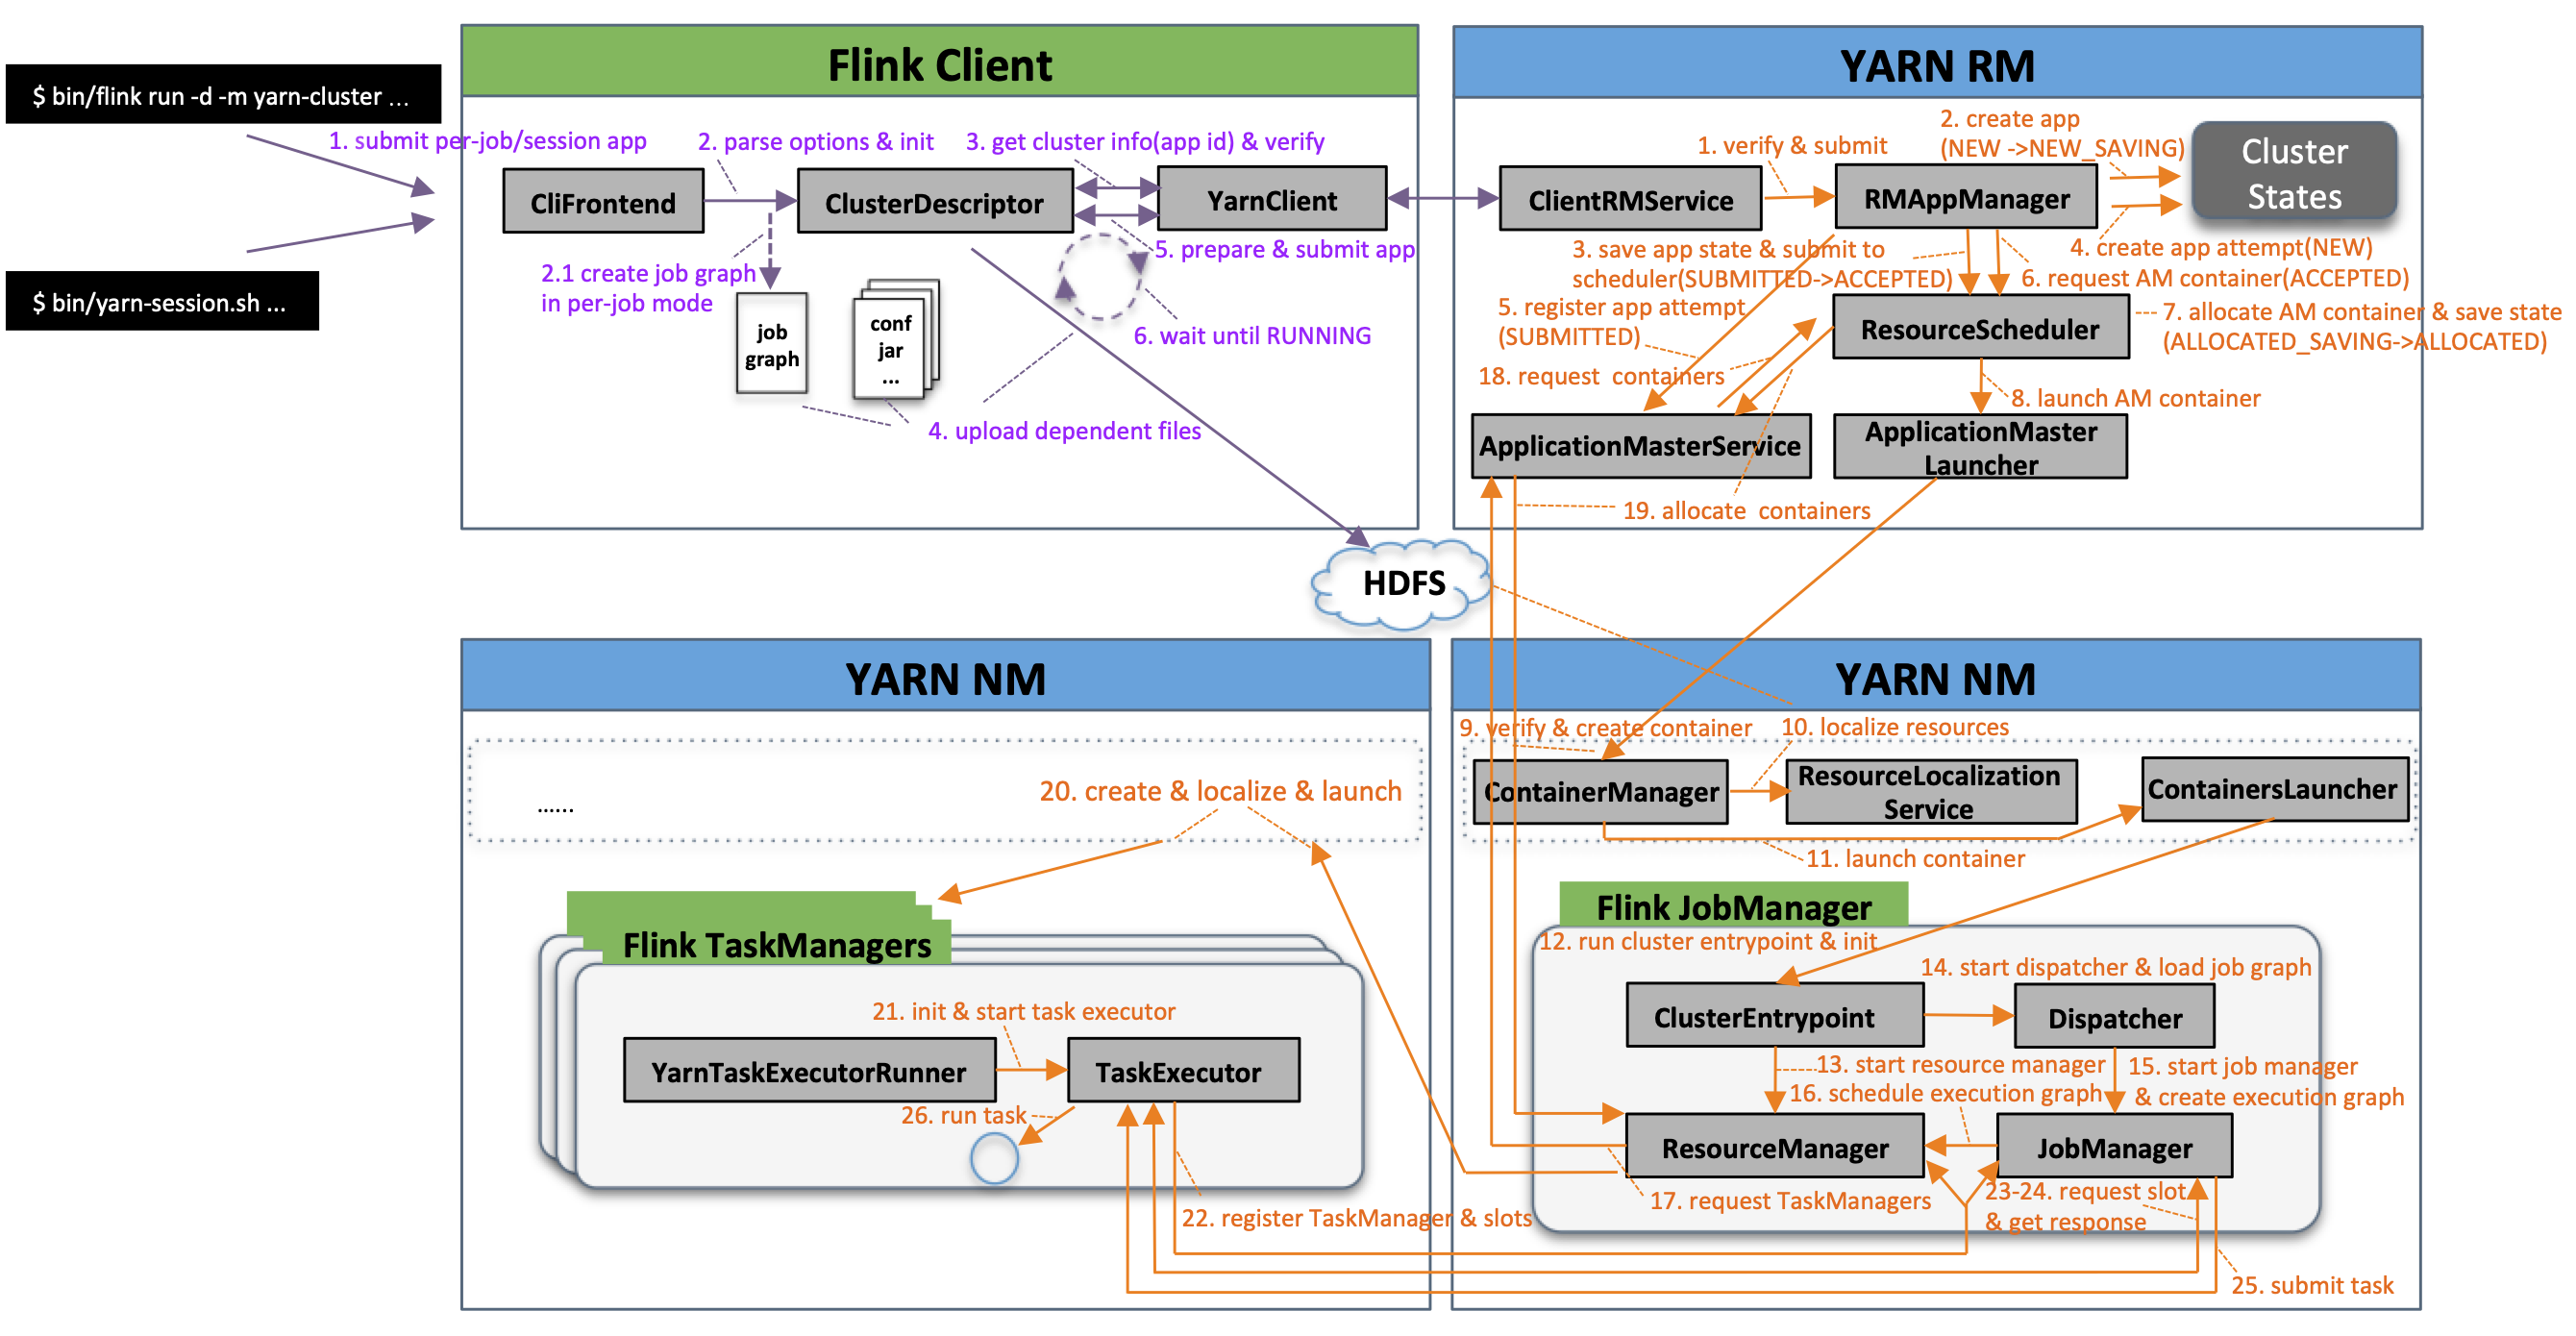 Flink on YARN 全流程图.png